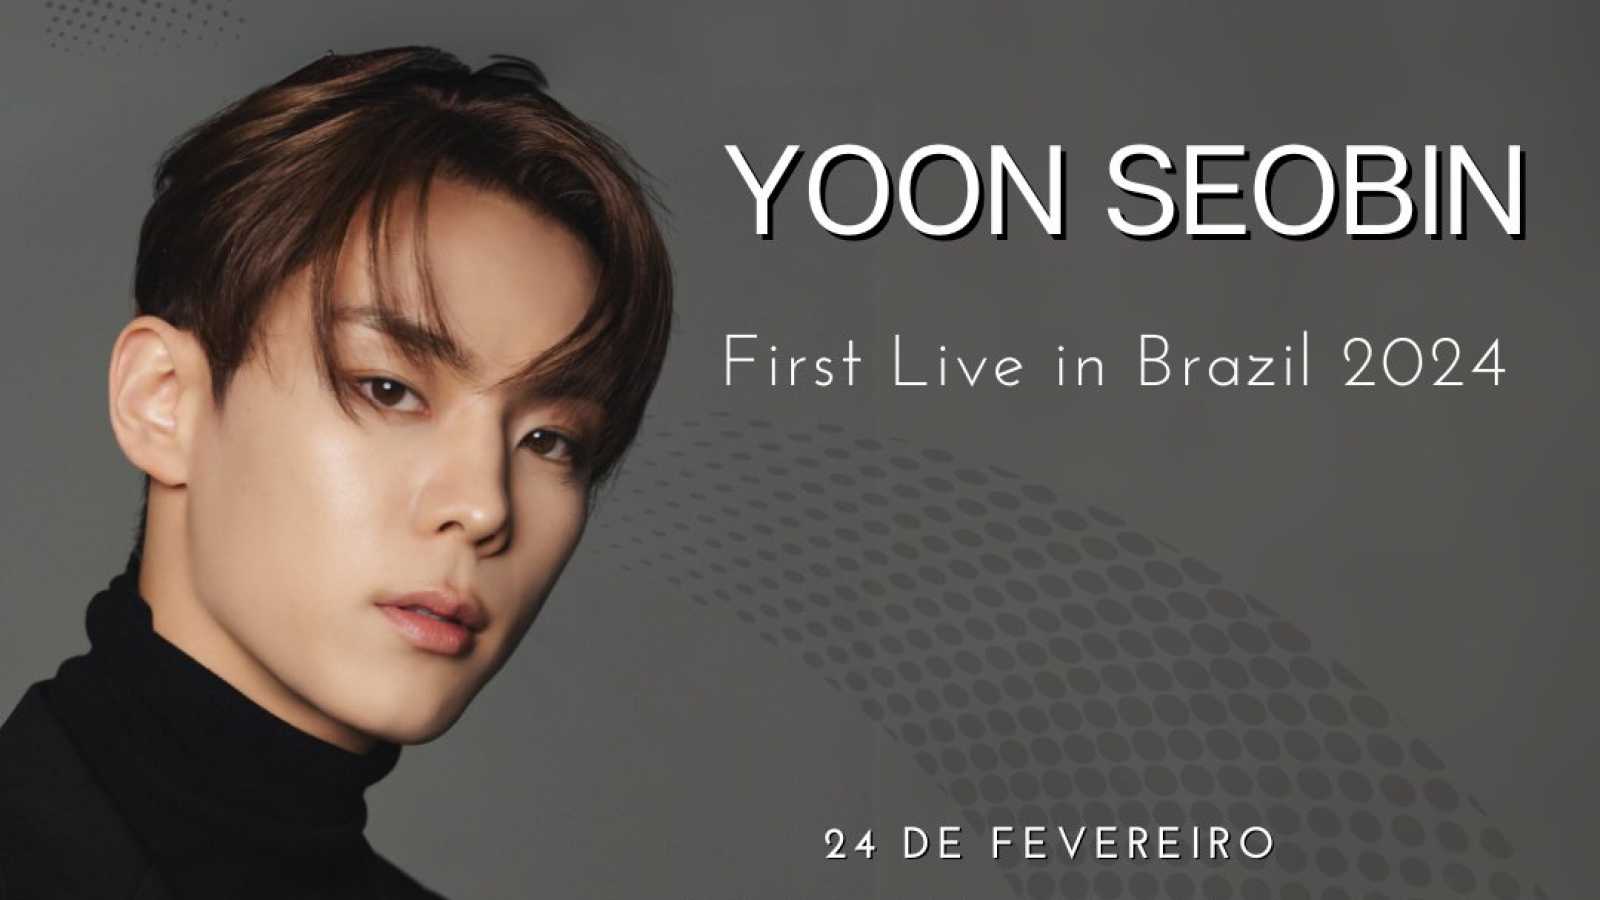 Yoon Seobin se apresentará pela primeira vez no Brasil em 2024 © Far Music Entertainment